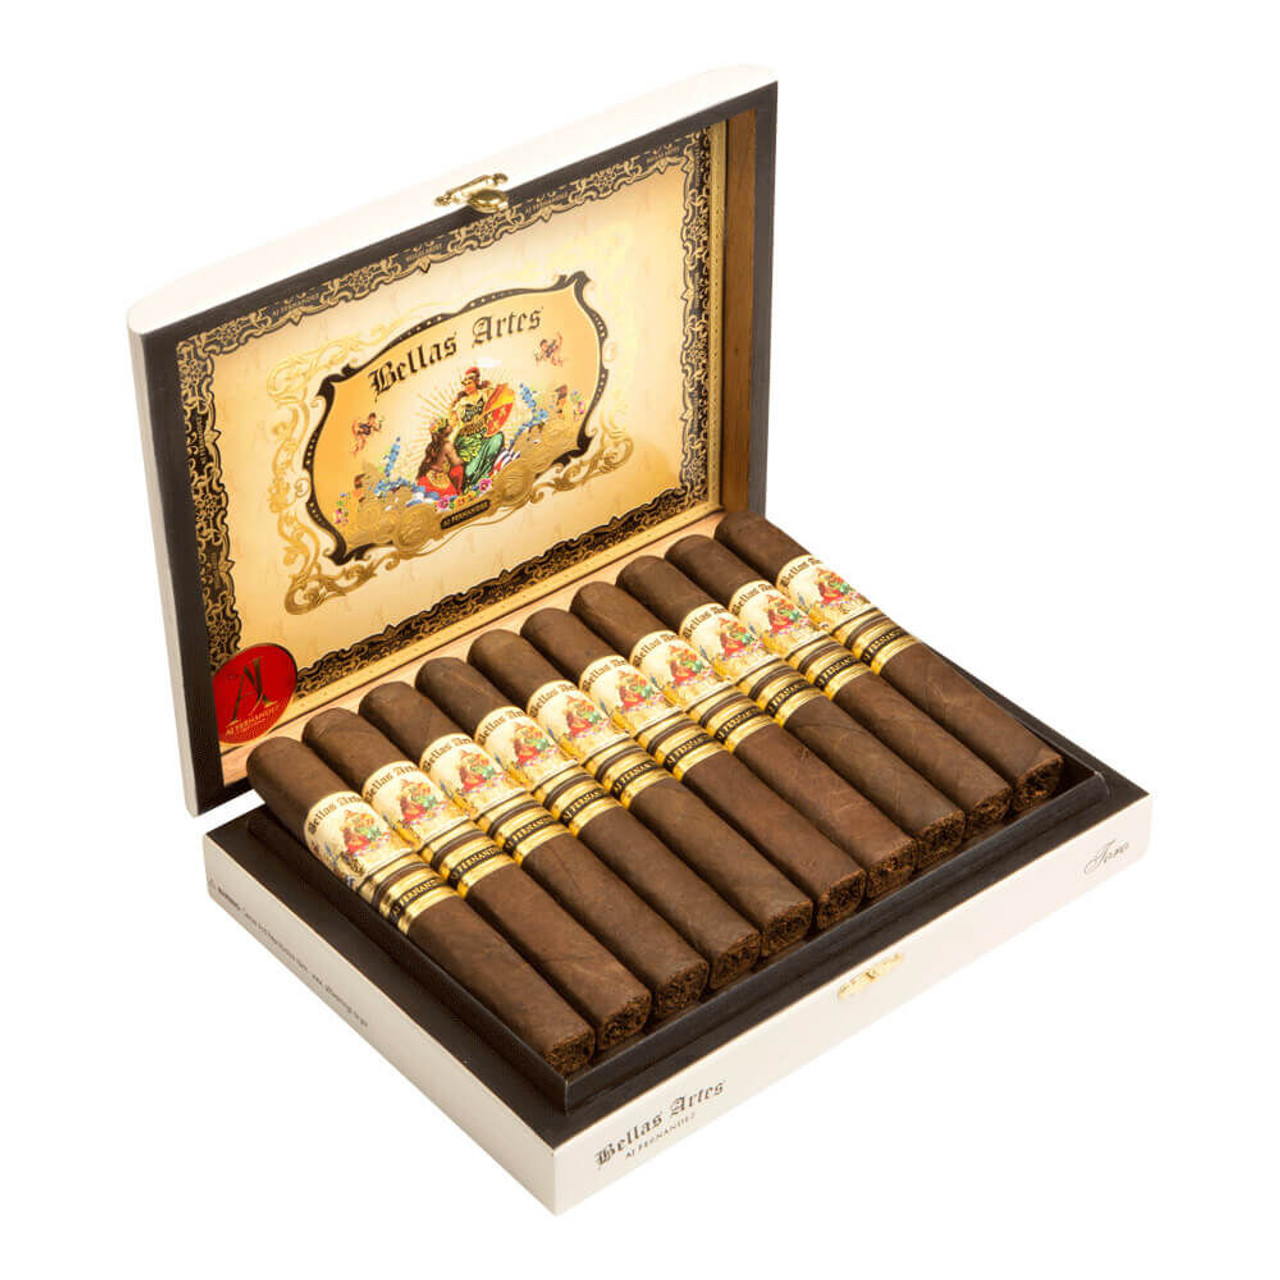 Bellas Artes by AJ Fernandez Maduro Brazil Toro Cigars - 6 x 54 (Box of 20) Open